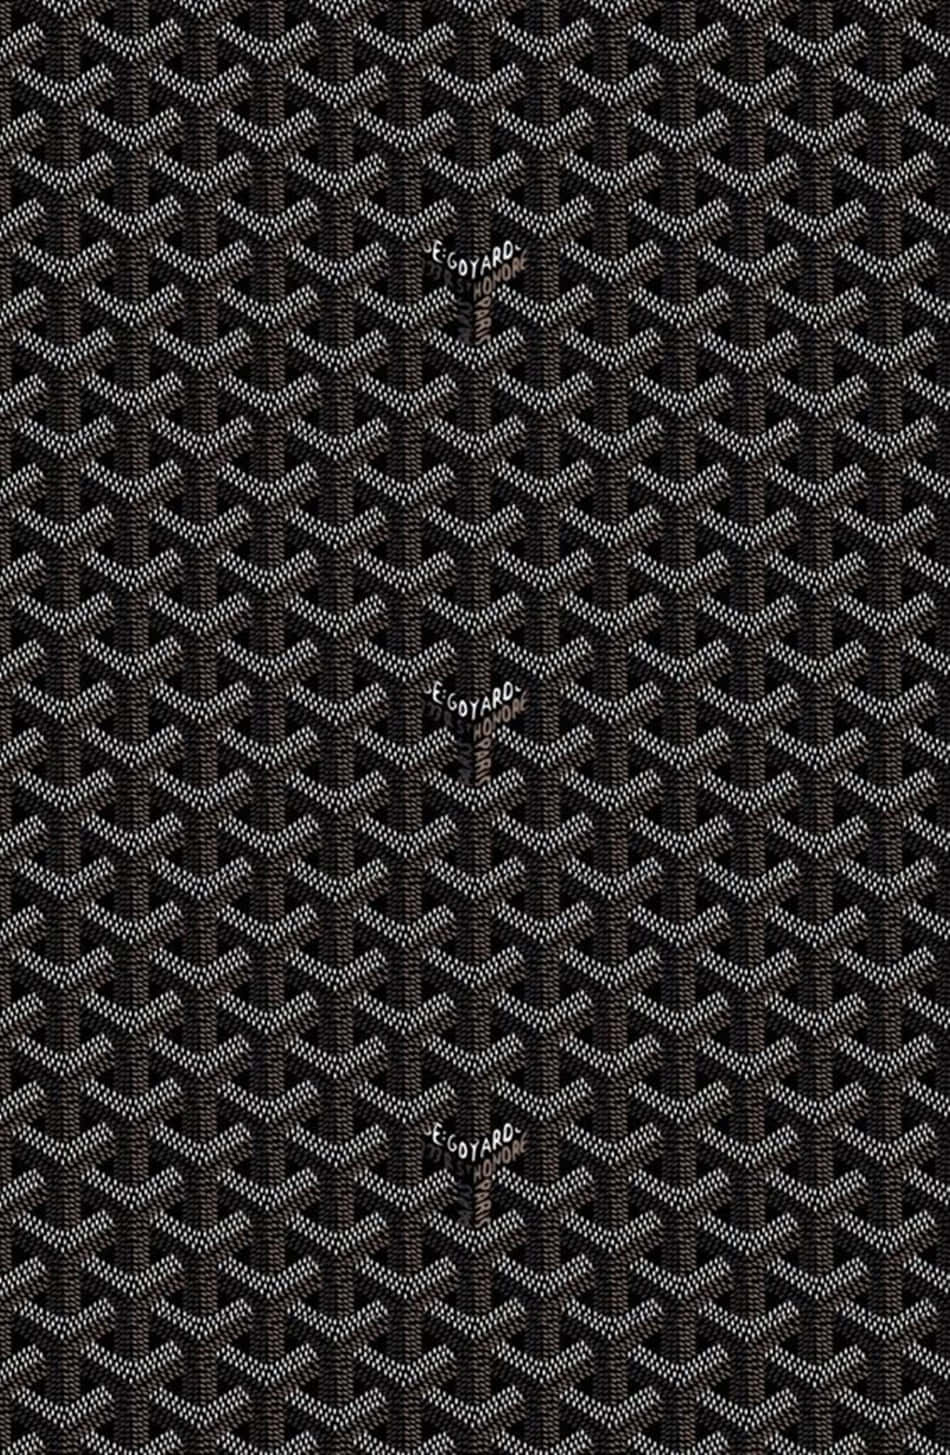 Beautiful Goyard iPhone Wallpaper  아이폰 배경화면 검은 배경화면 아이폰